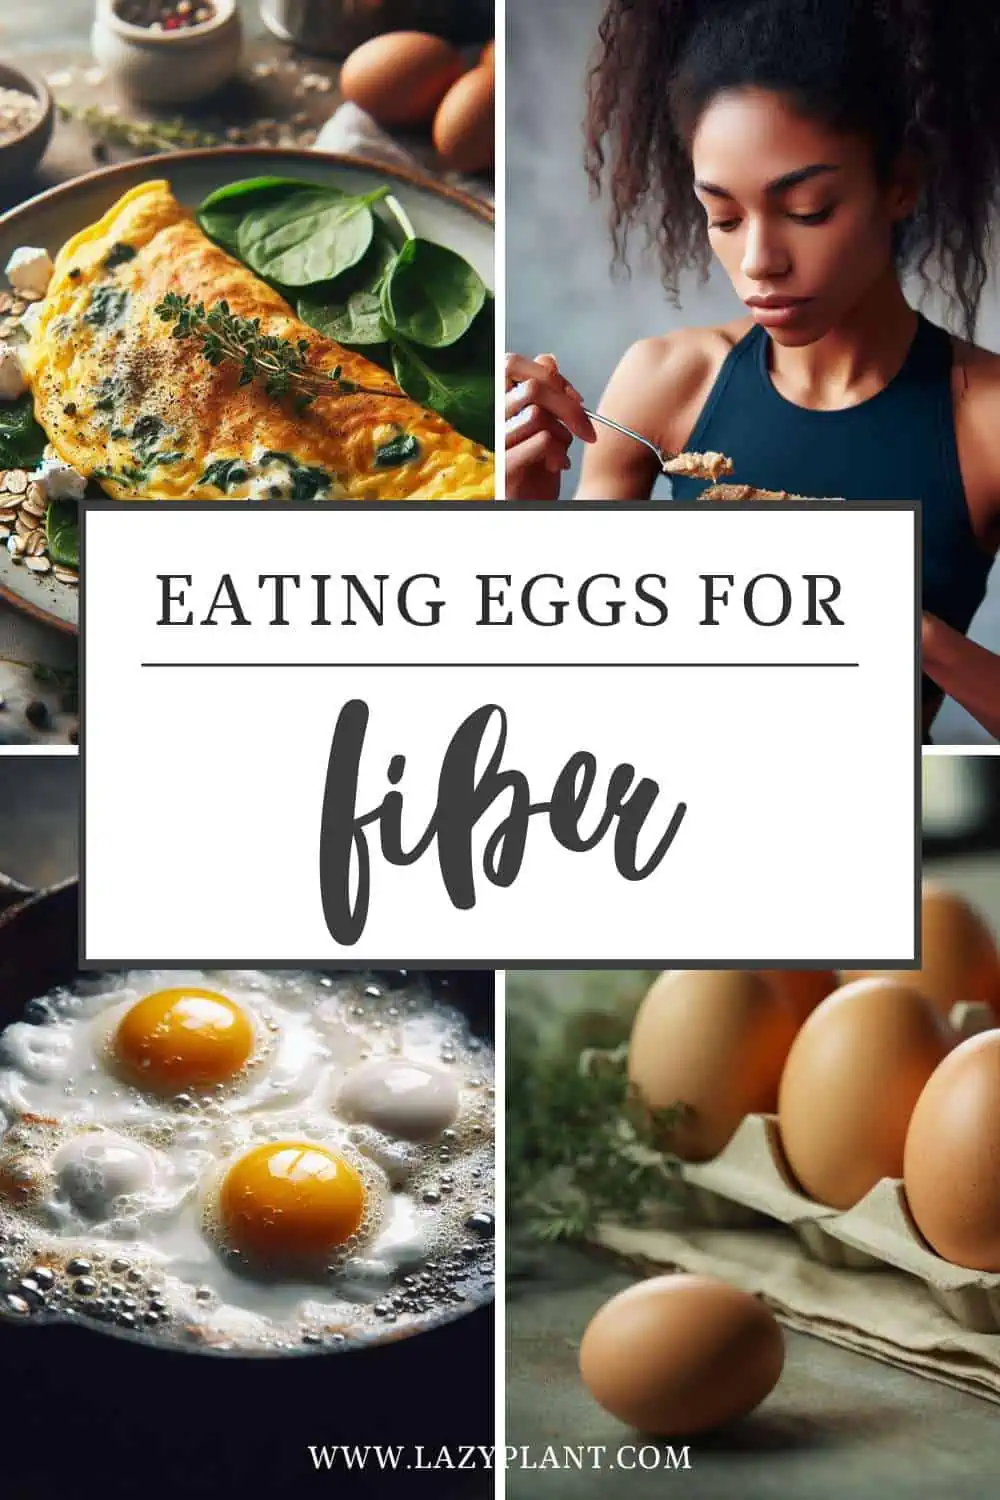 Eat Eggs with Vegetables, Beans, or Grains for Fiber.